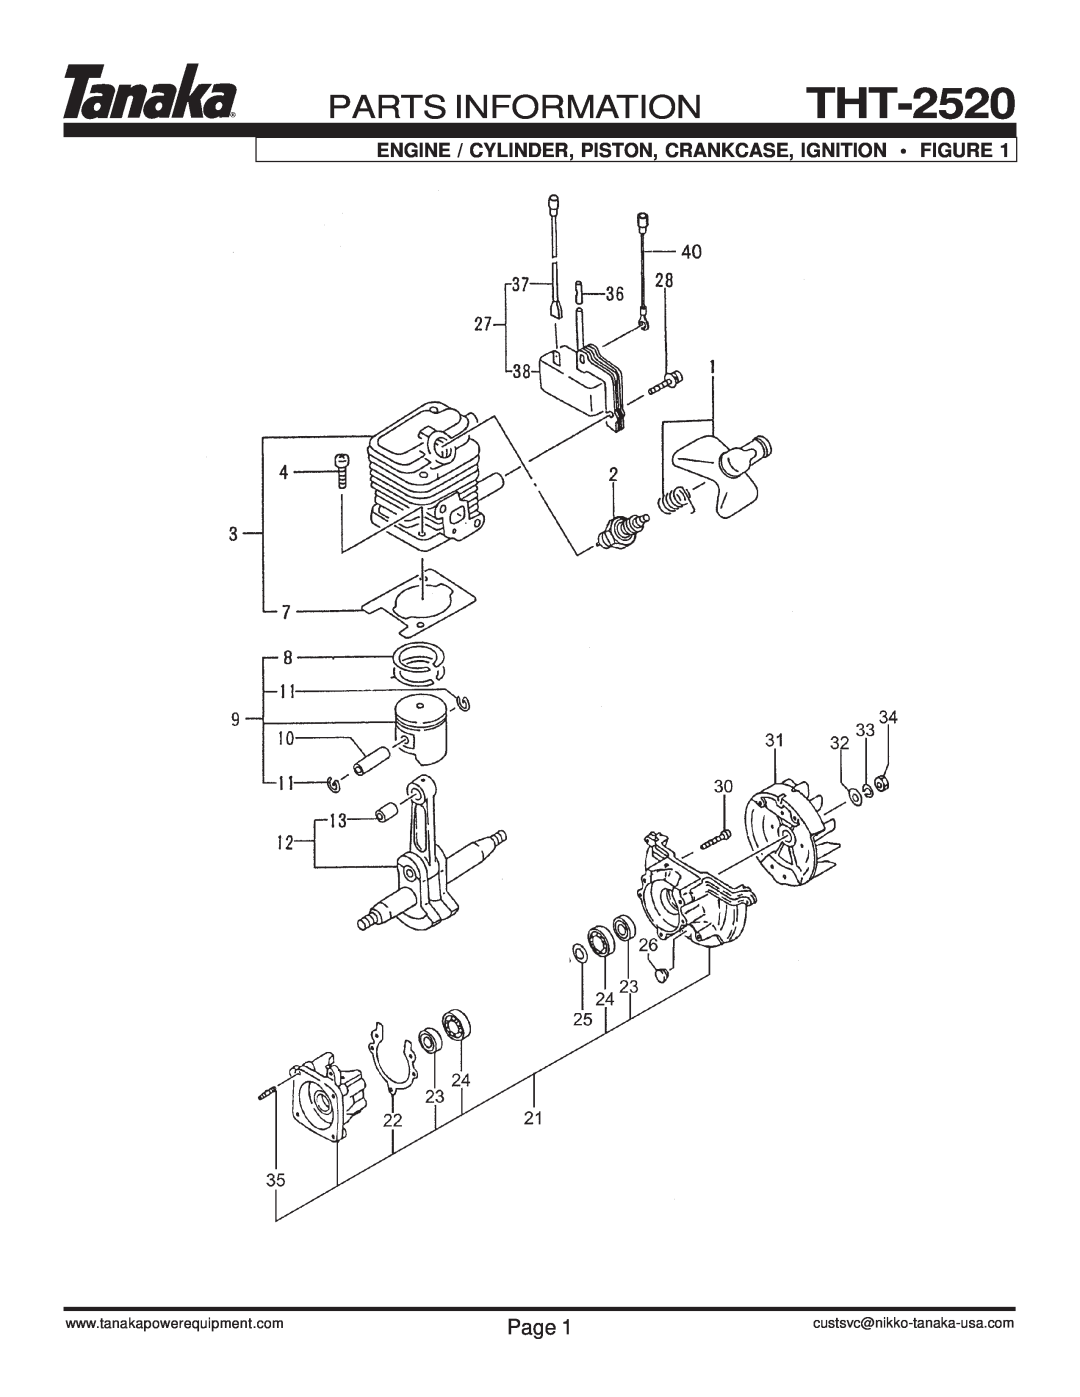 Tanaka THT-2520 manual Parts Information, Engine / Cylinder, Piston, Crankcase, Ignition Figure, Page 